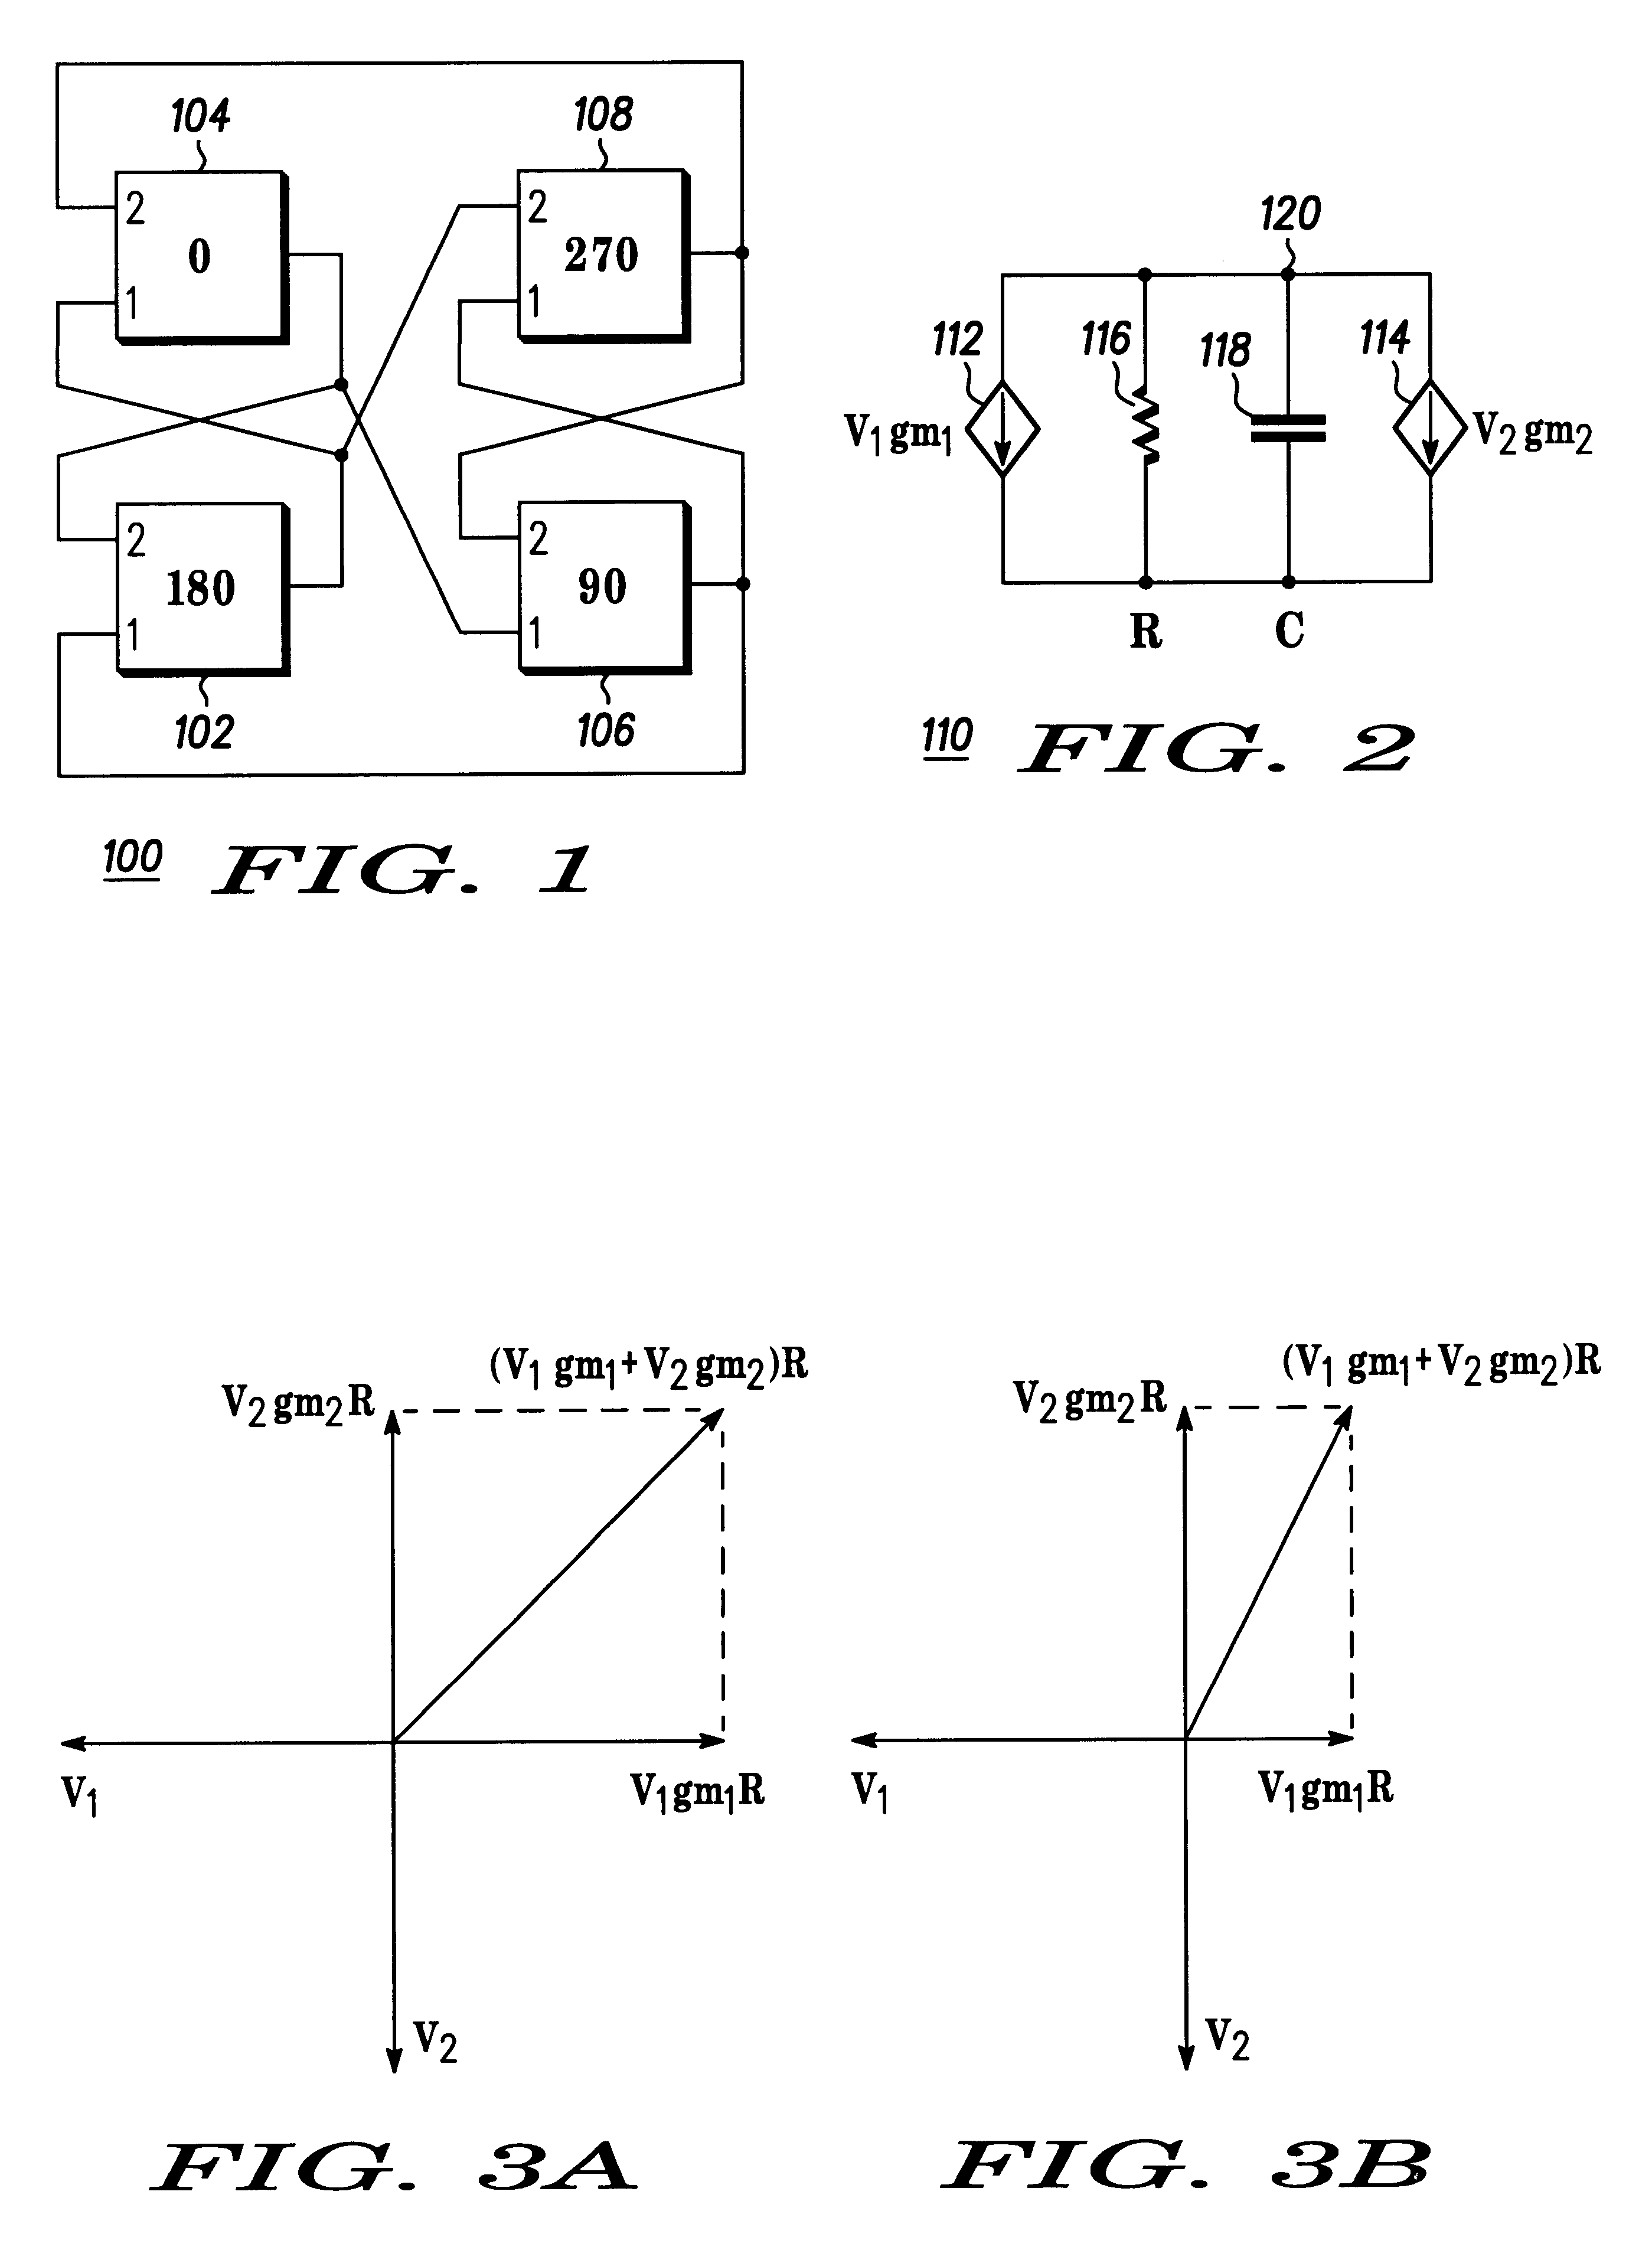 Multiphase voltage controlled oscillator